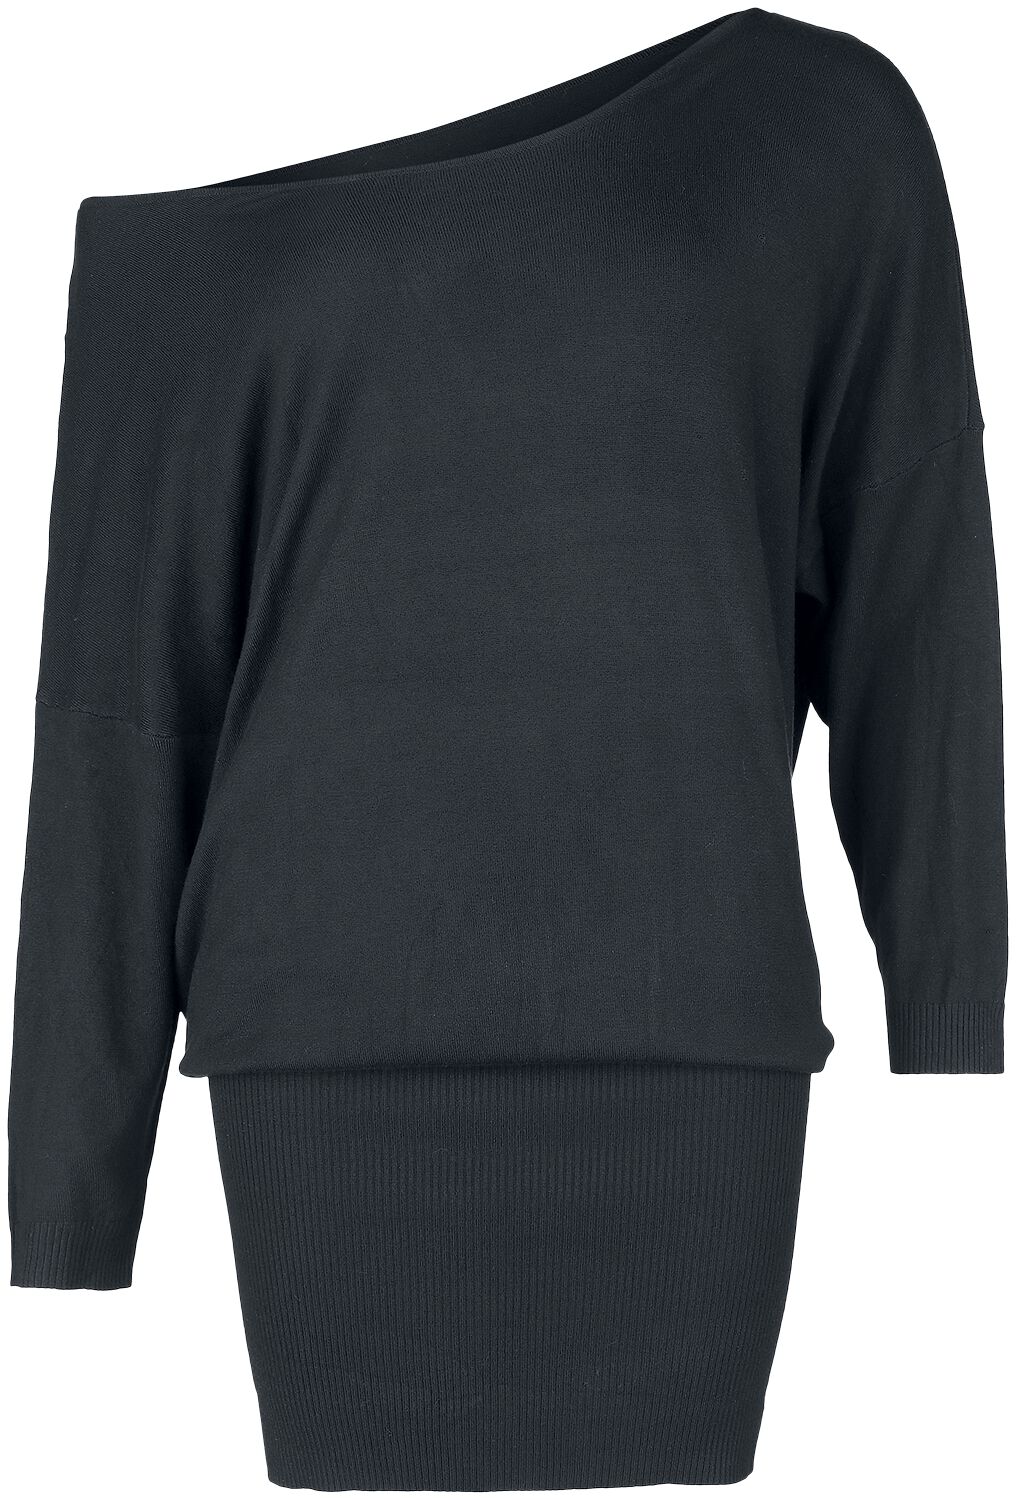 Forplay Emma Long-sleeve Shirt black